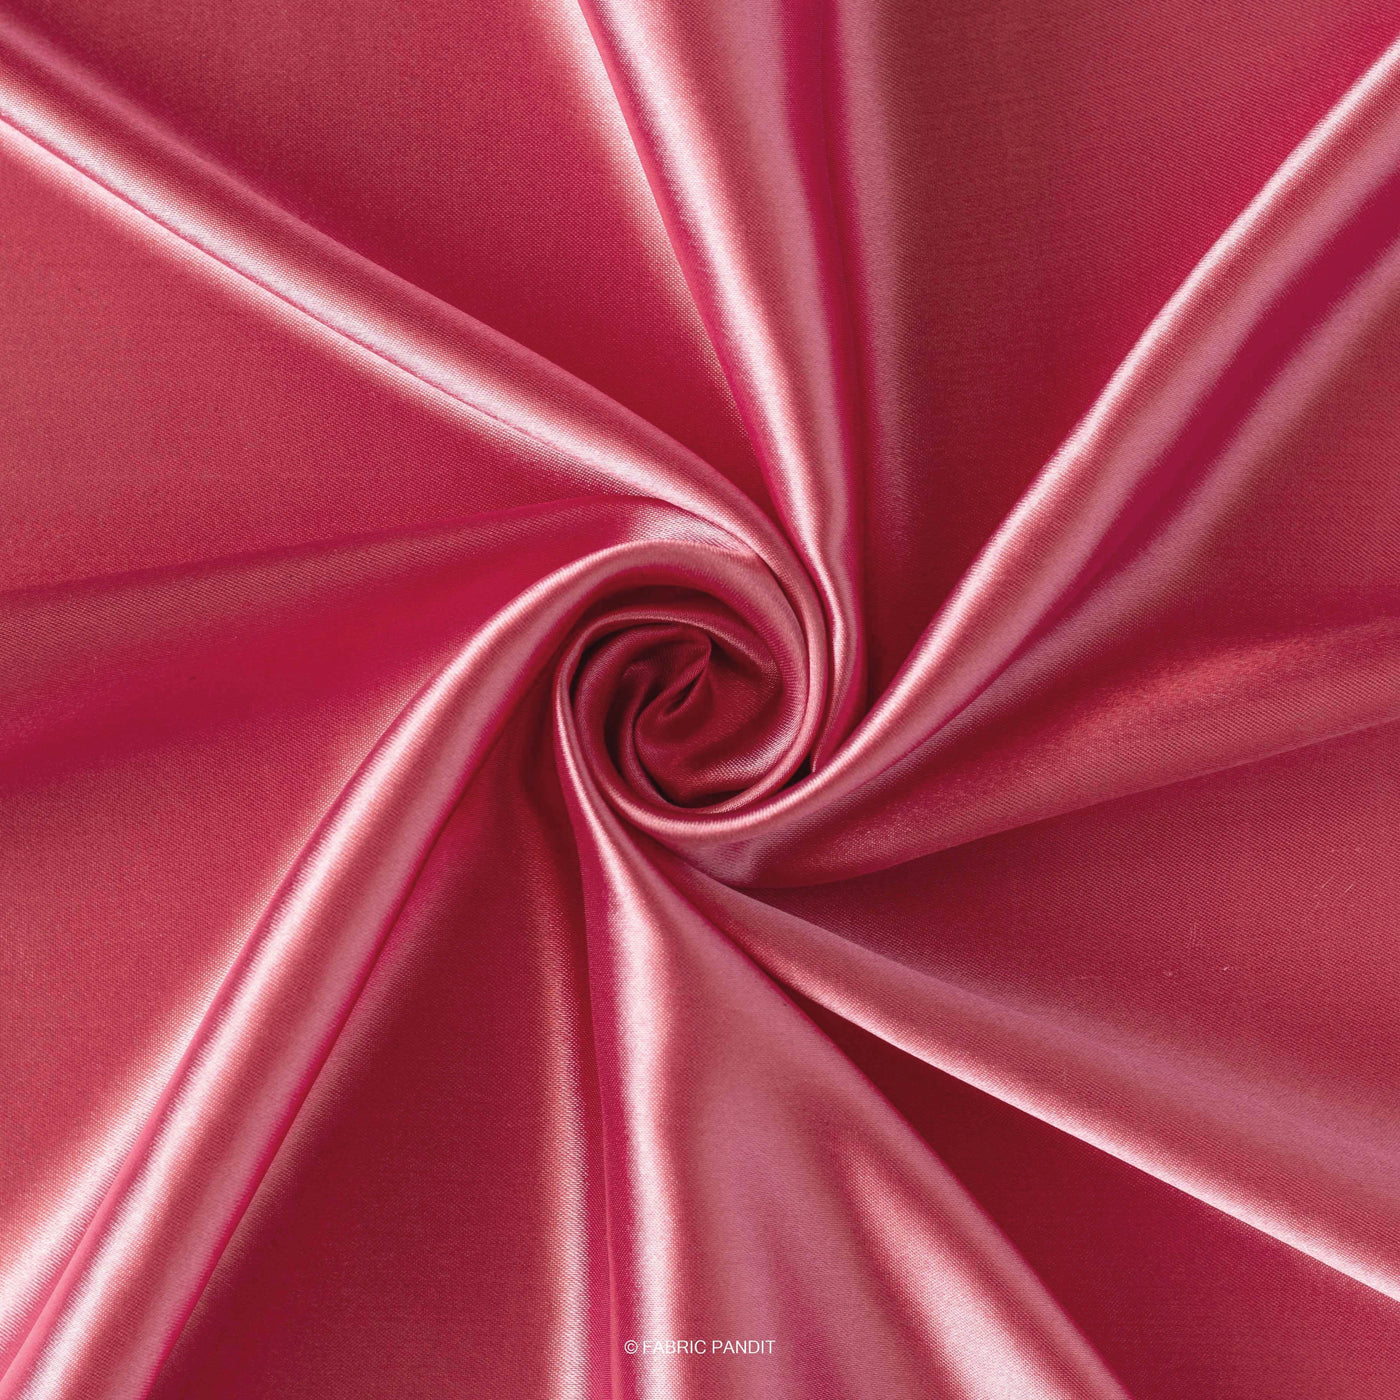 Fabric Pandit Cut Piece 0.50M (CUT PIECE) Dusty Pink Plain Premium Ultra Satin Fabric (Width 44 Inches)